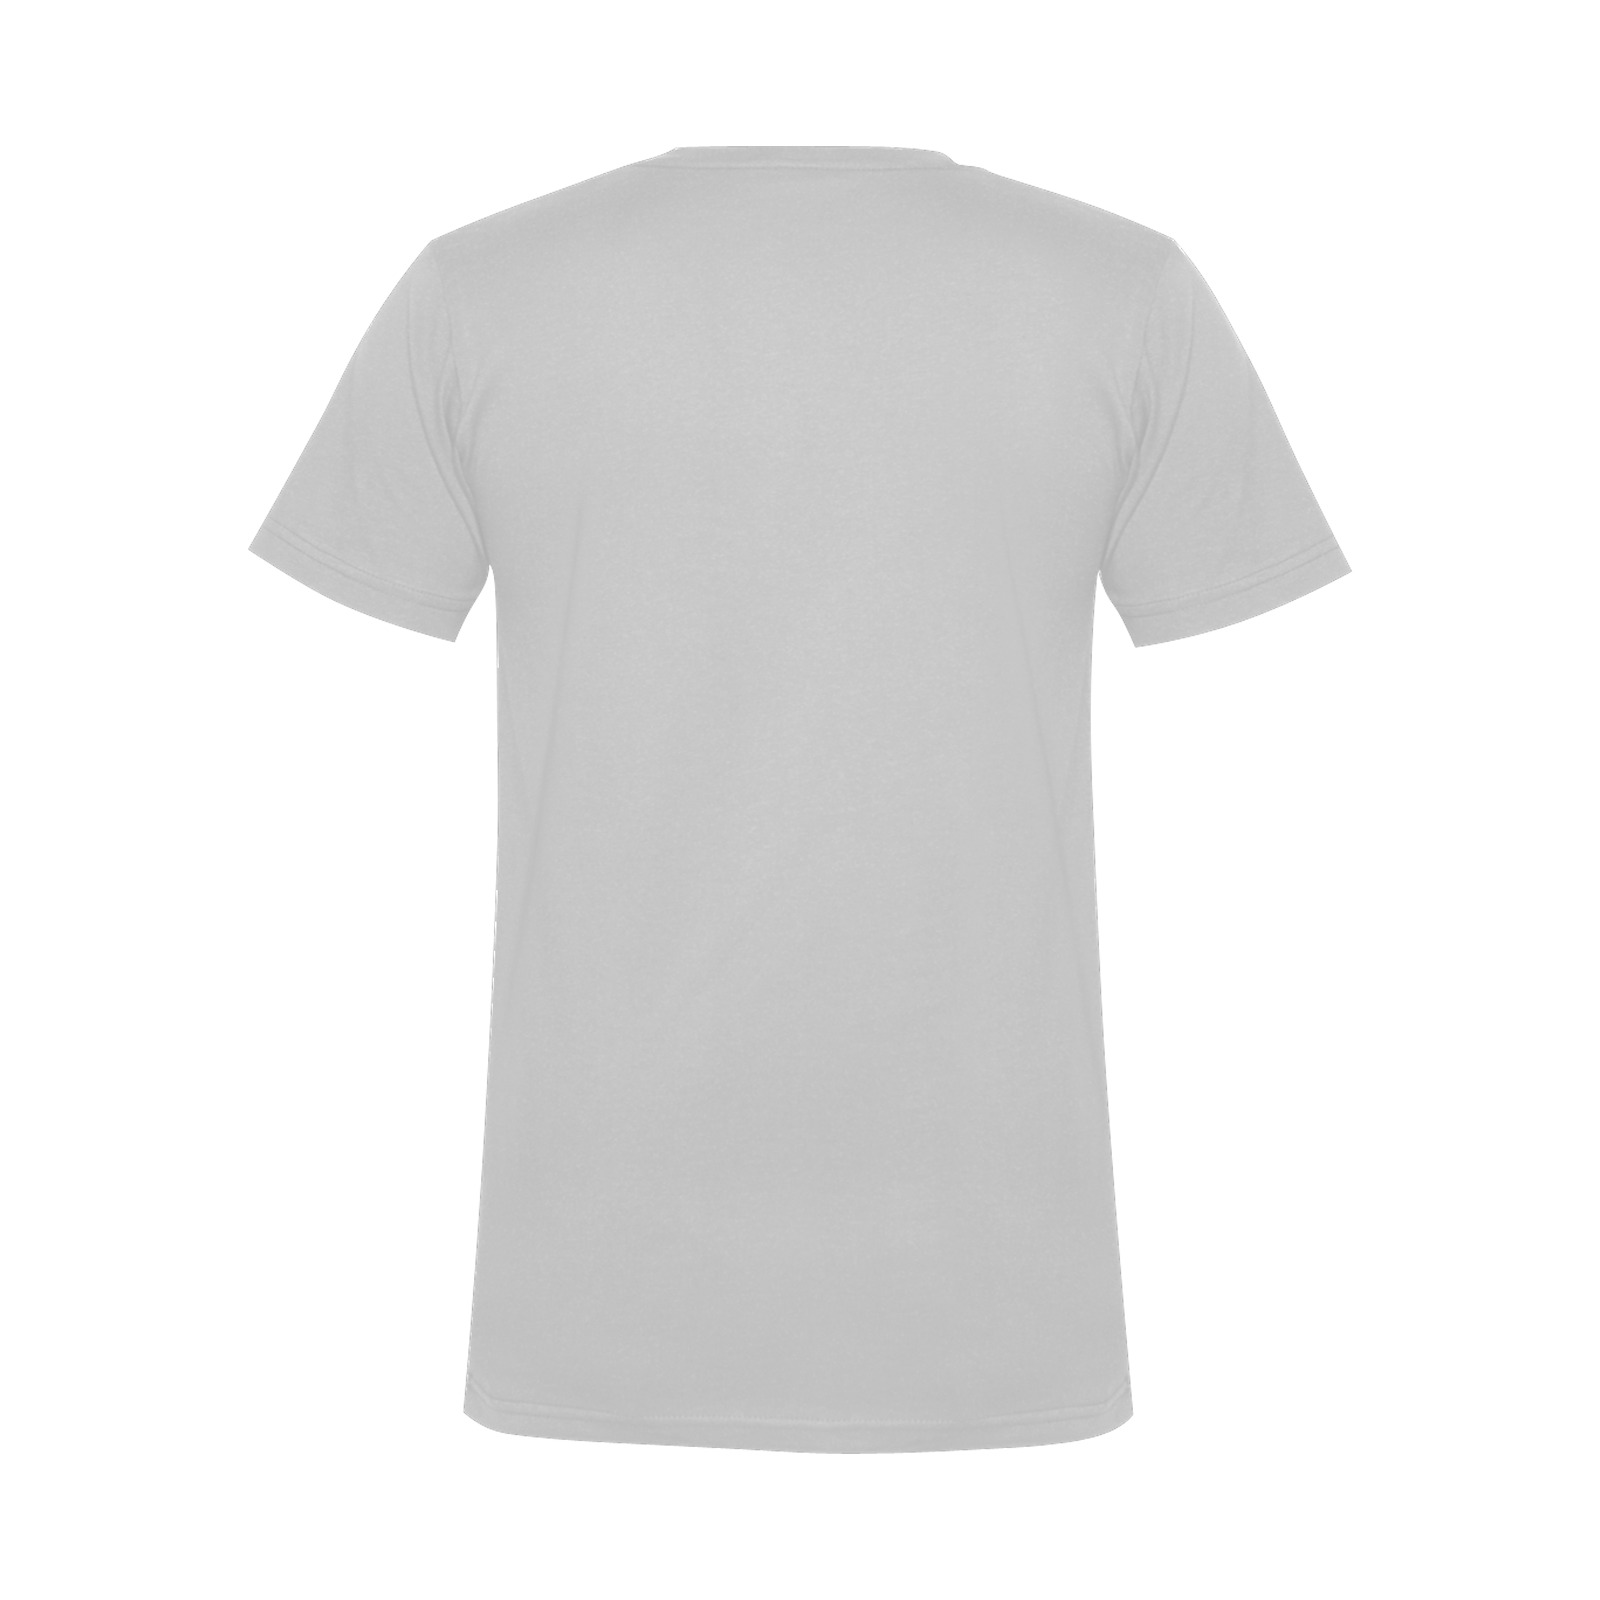 POSTAL Men's V-Neck T-shirt (USA Size) (Model T10)